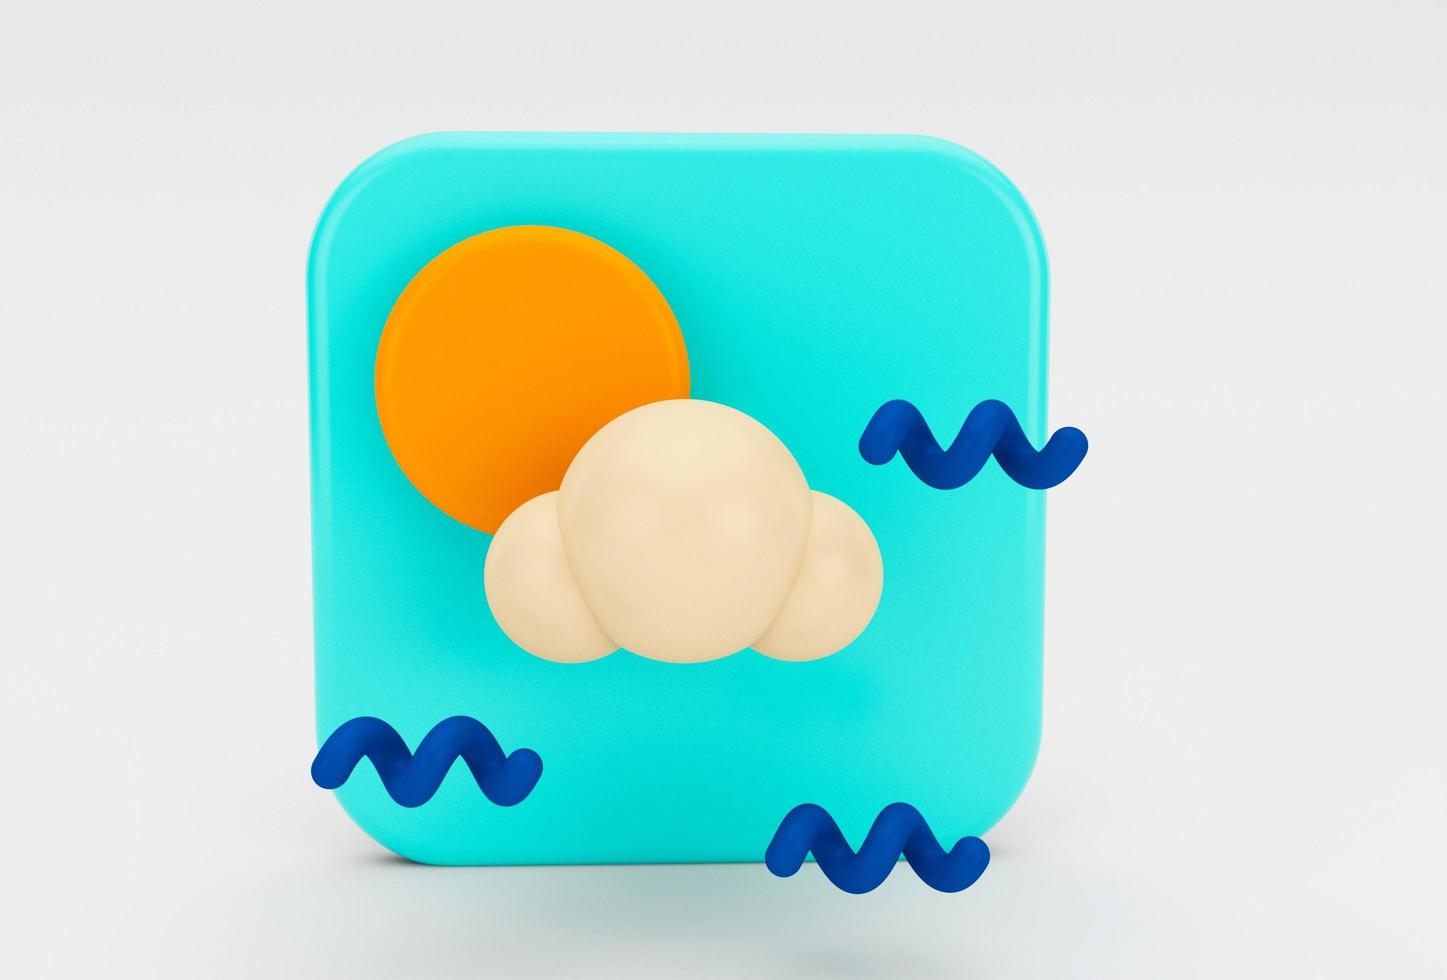 icône météo nuage illustration 3d rendu 3d minimal. photo